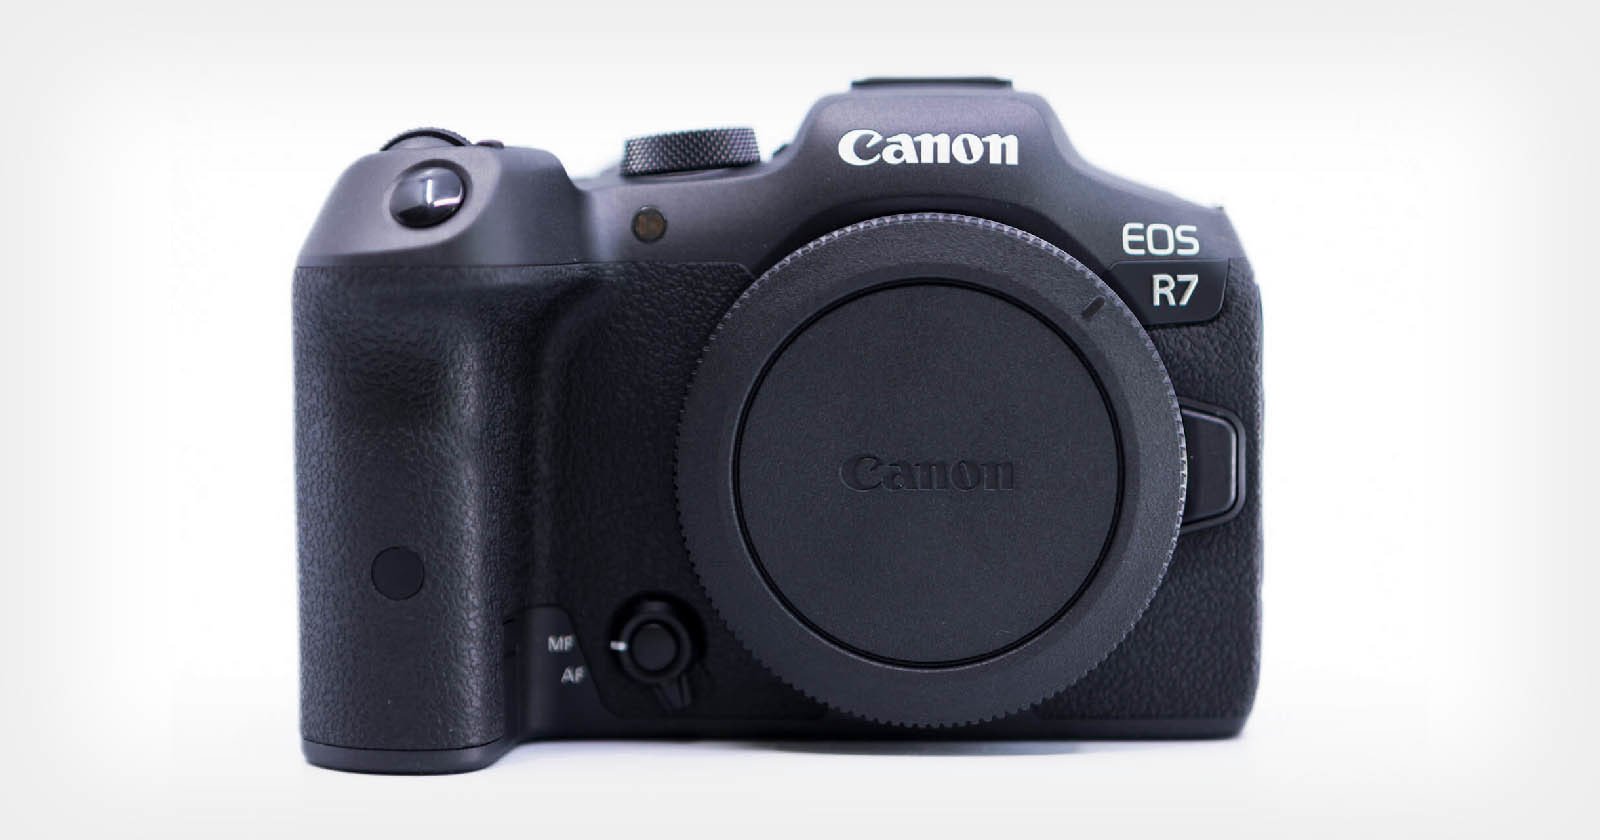 Canon EOS R7 Teardown: Inside the Prosumer APS-C Mirrorless Camera